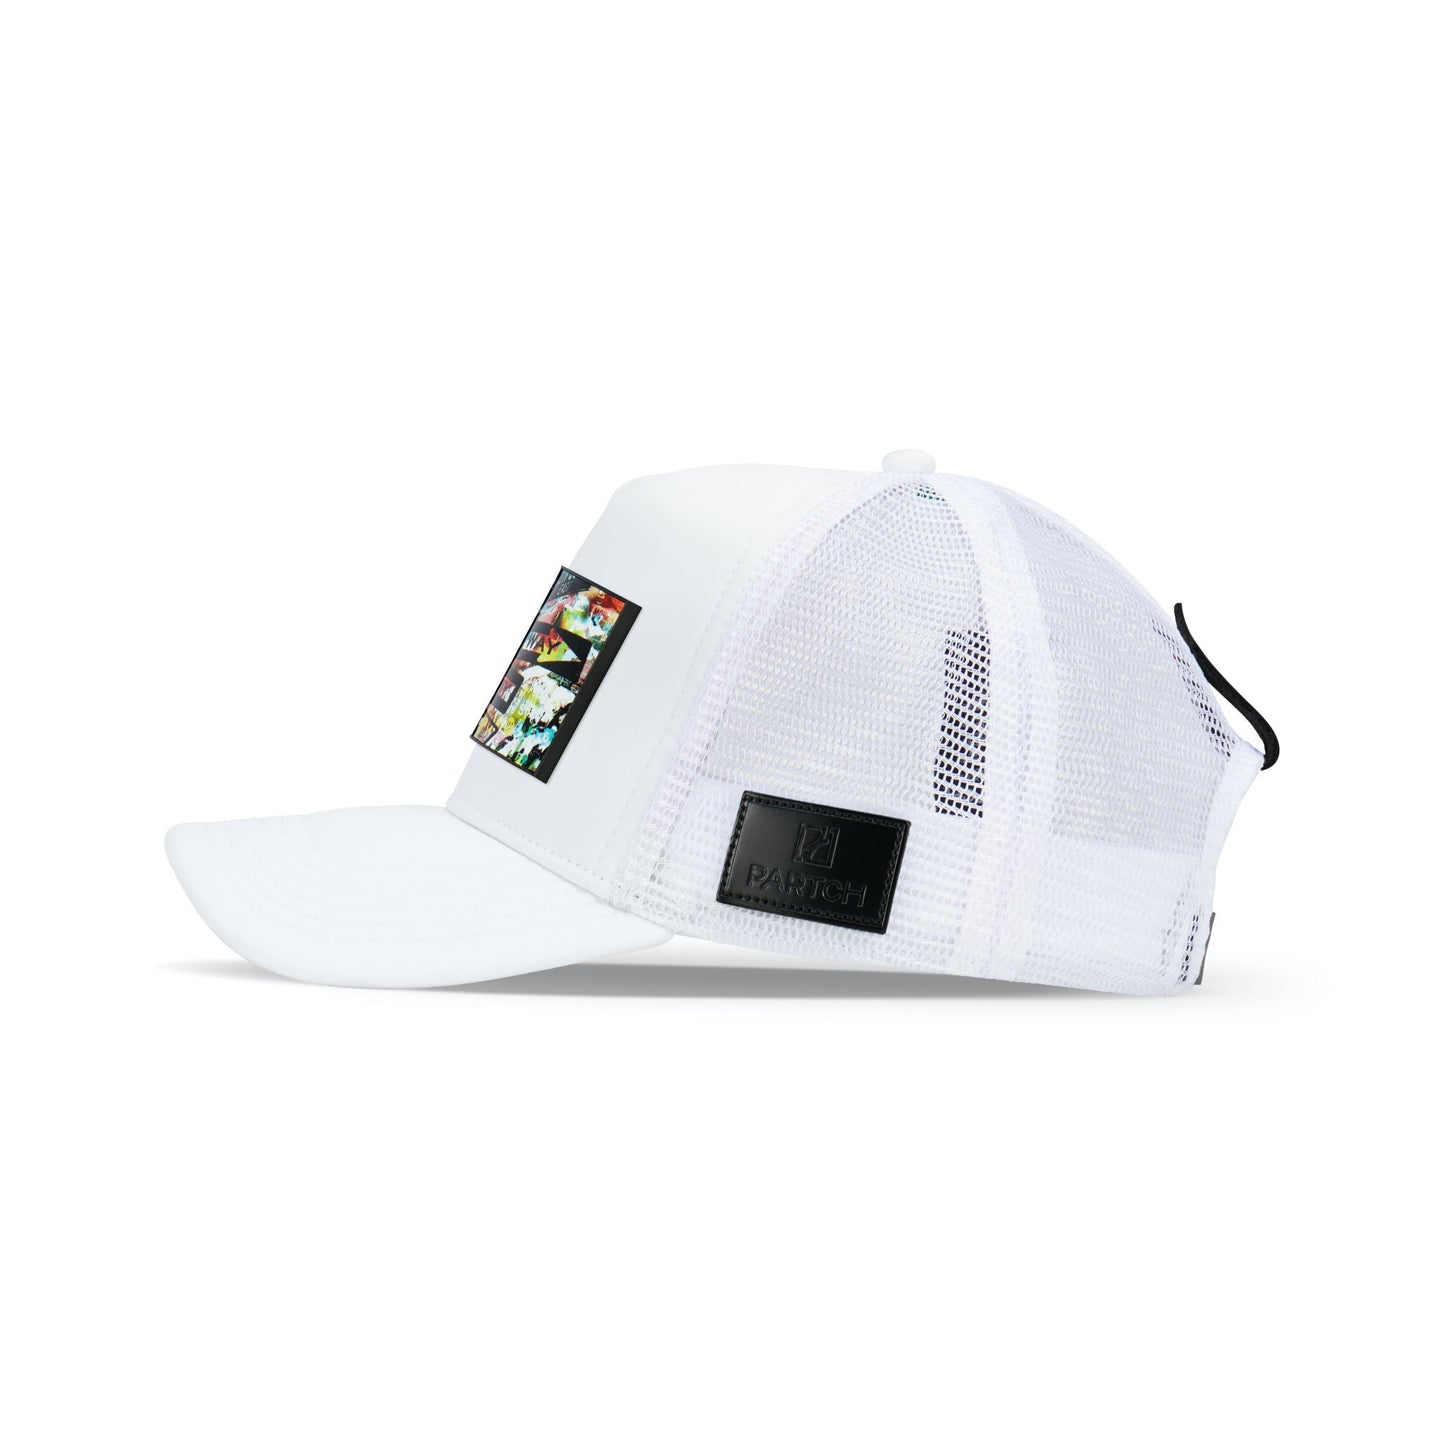 Partch Trucker Hat White with PARTCH-Clip Unixvi Side View